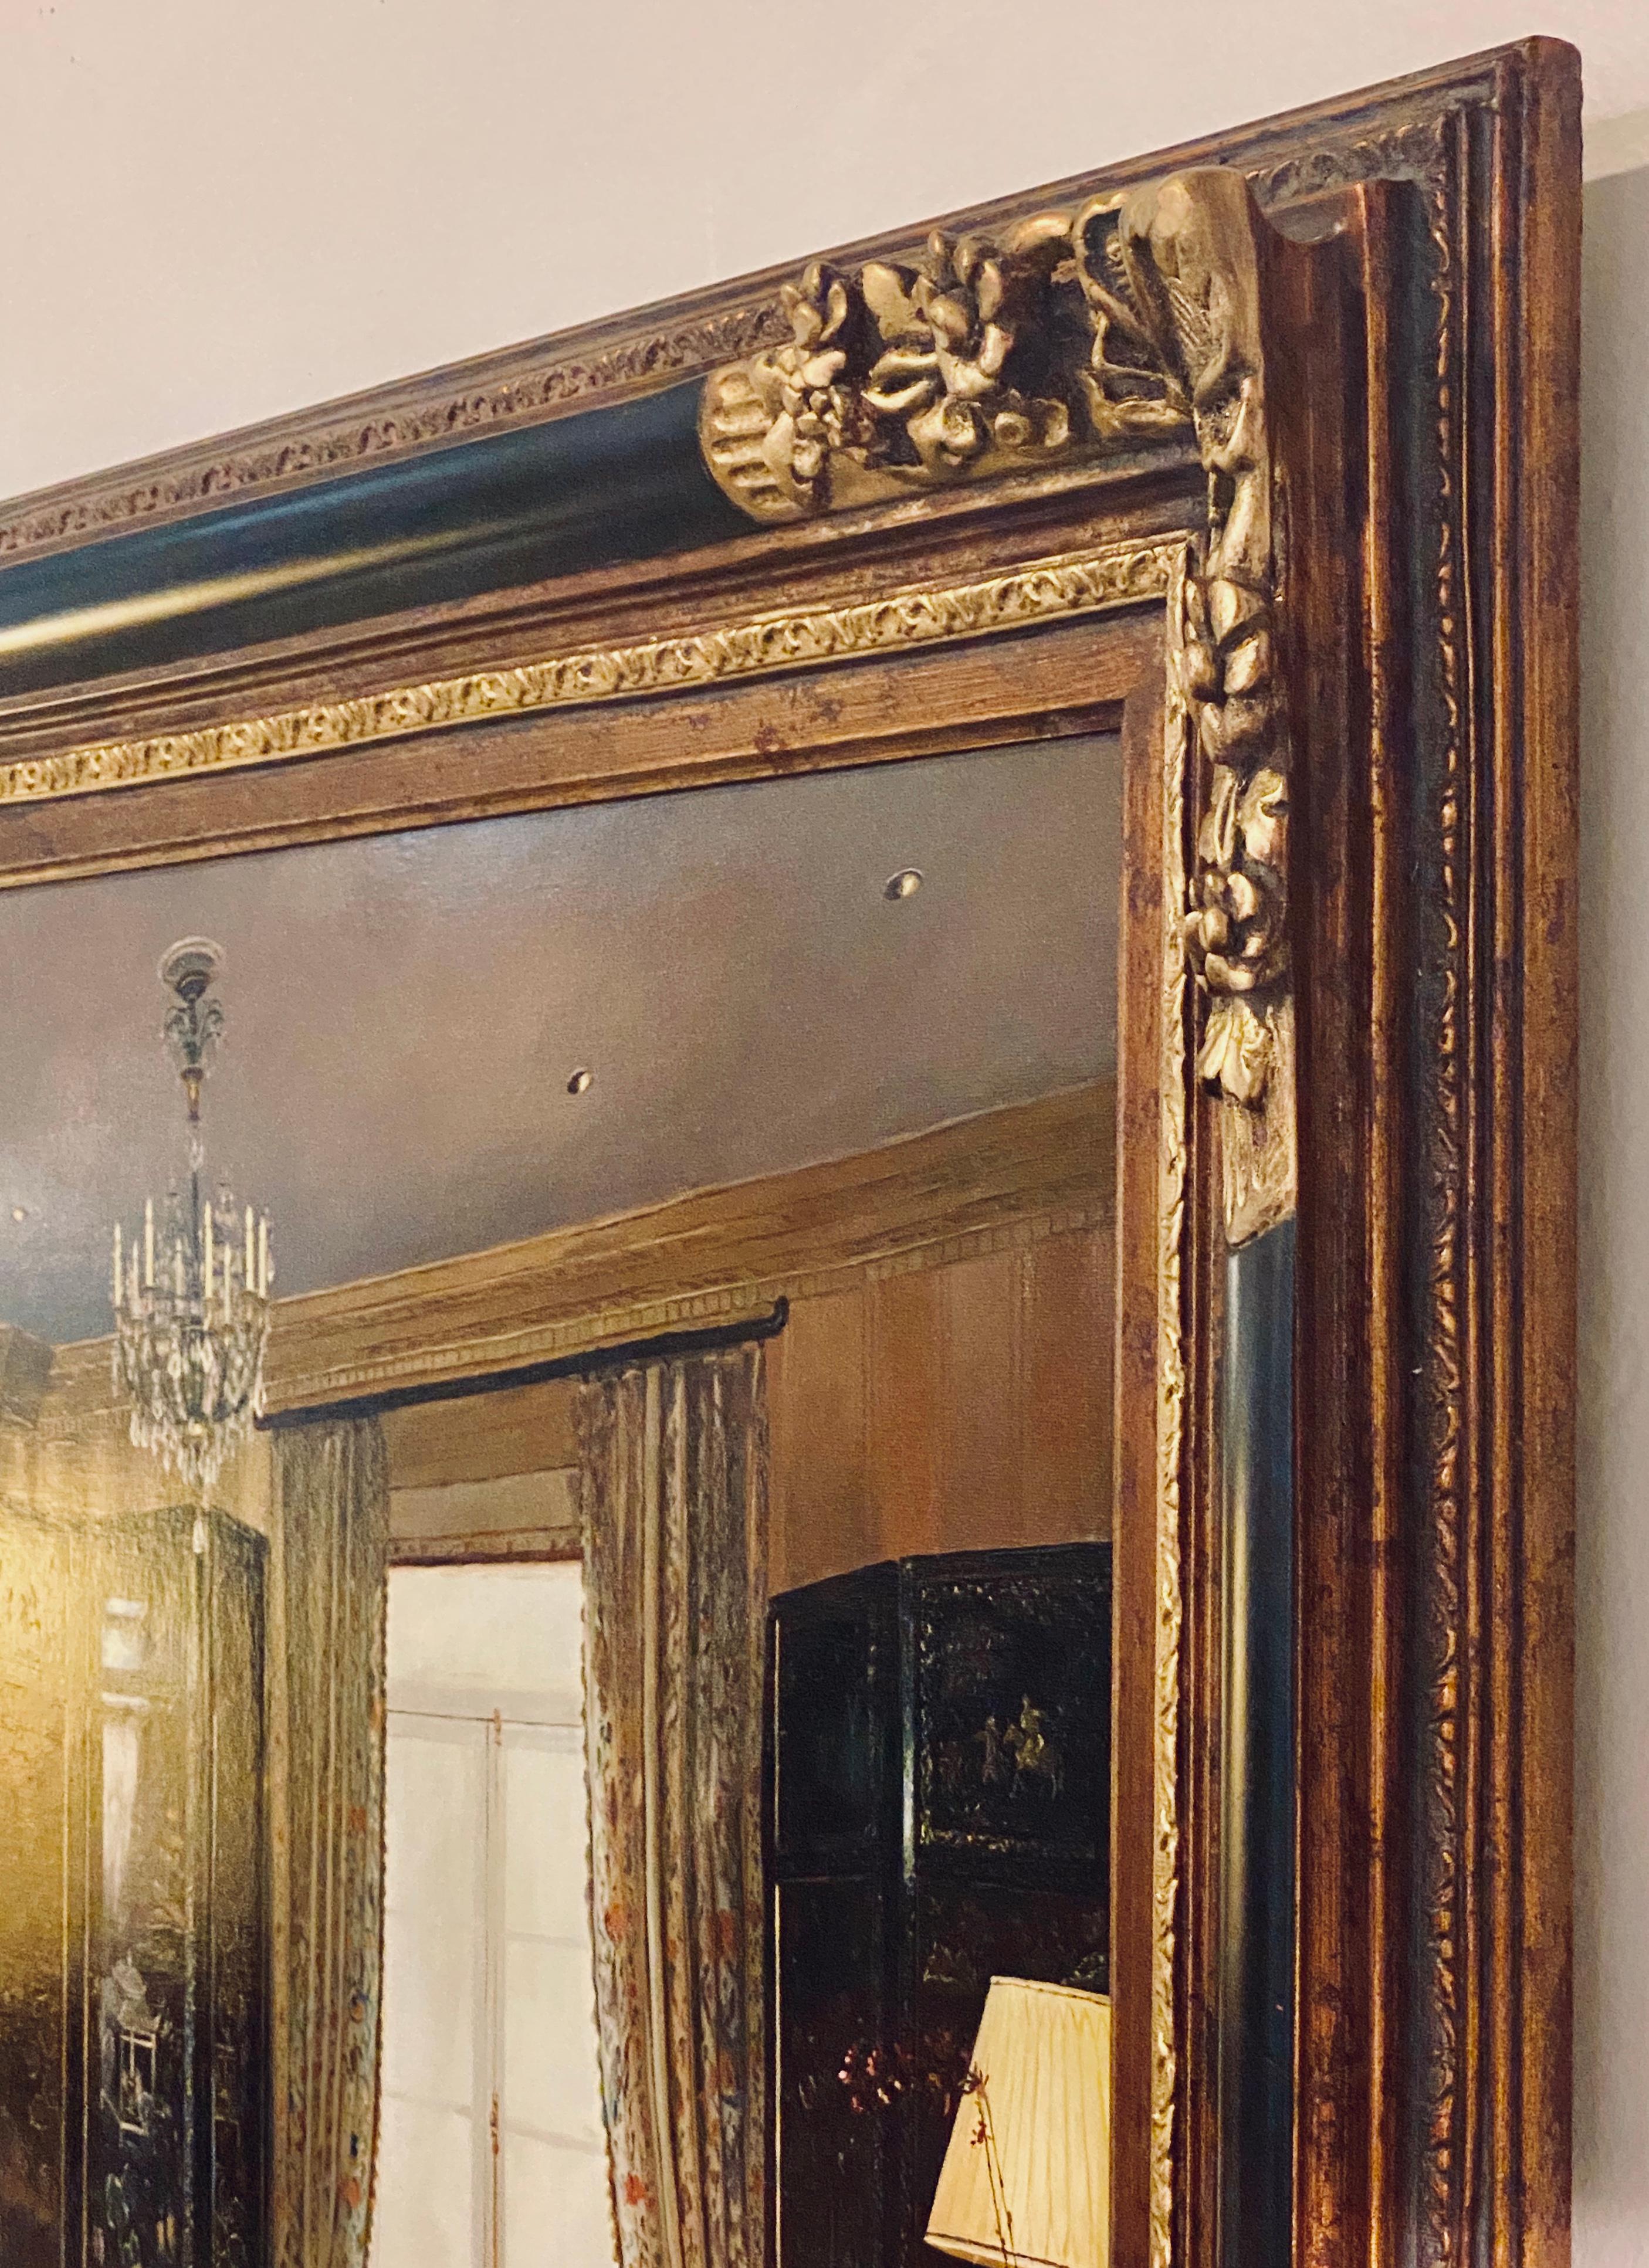 Oil on Canvas Interior Home Design in a Custom Frame, Signed Feldman 9